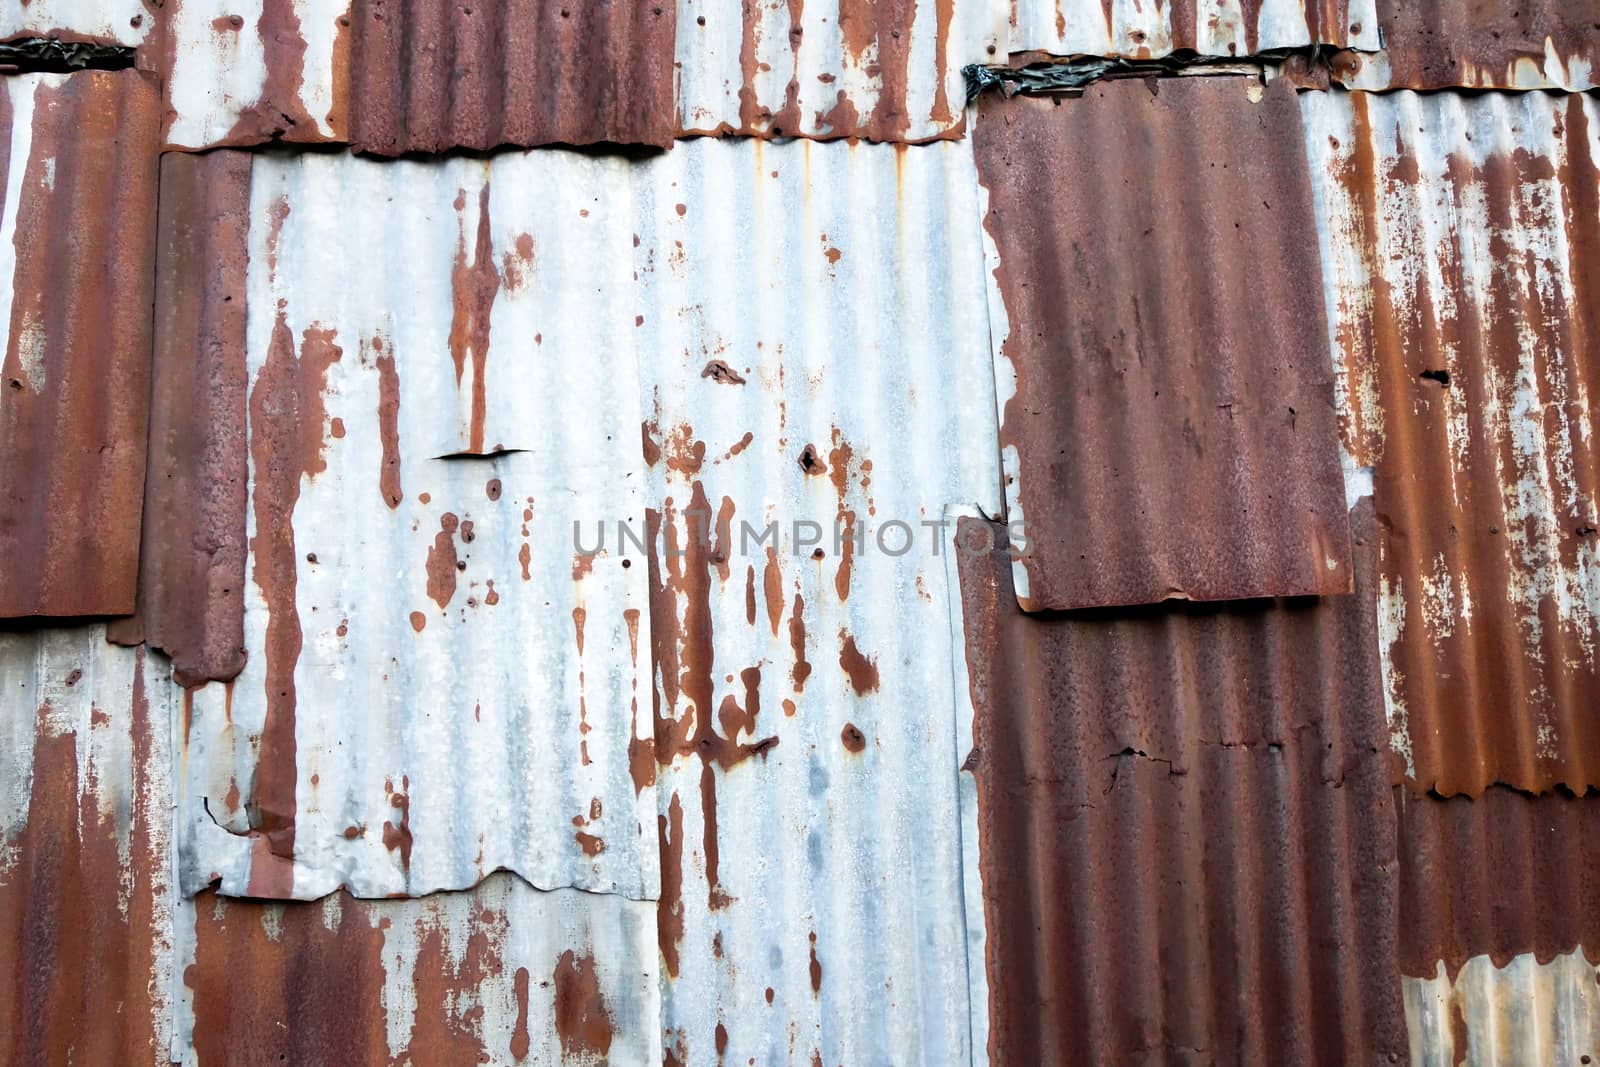 Old rusty zinc plat wall, Zinc wall ,rusty Zinc grunge background. process in vintage style